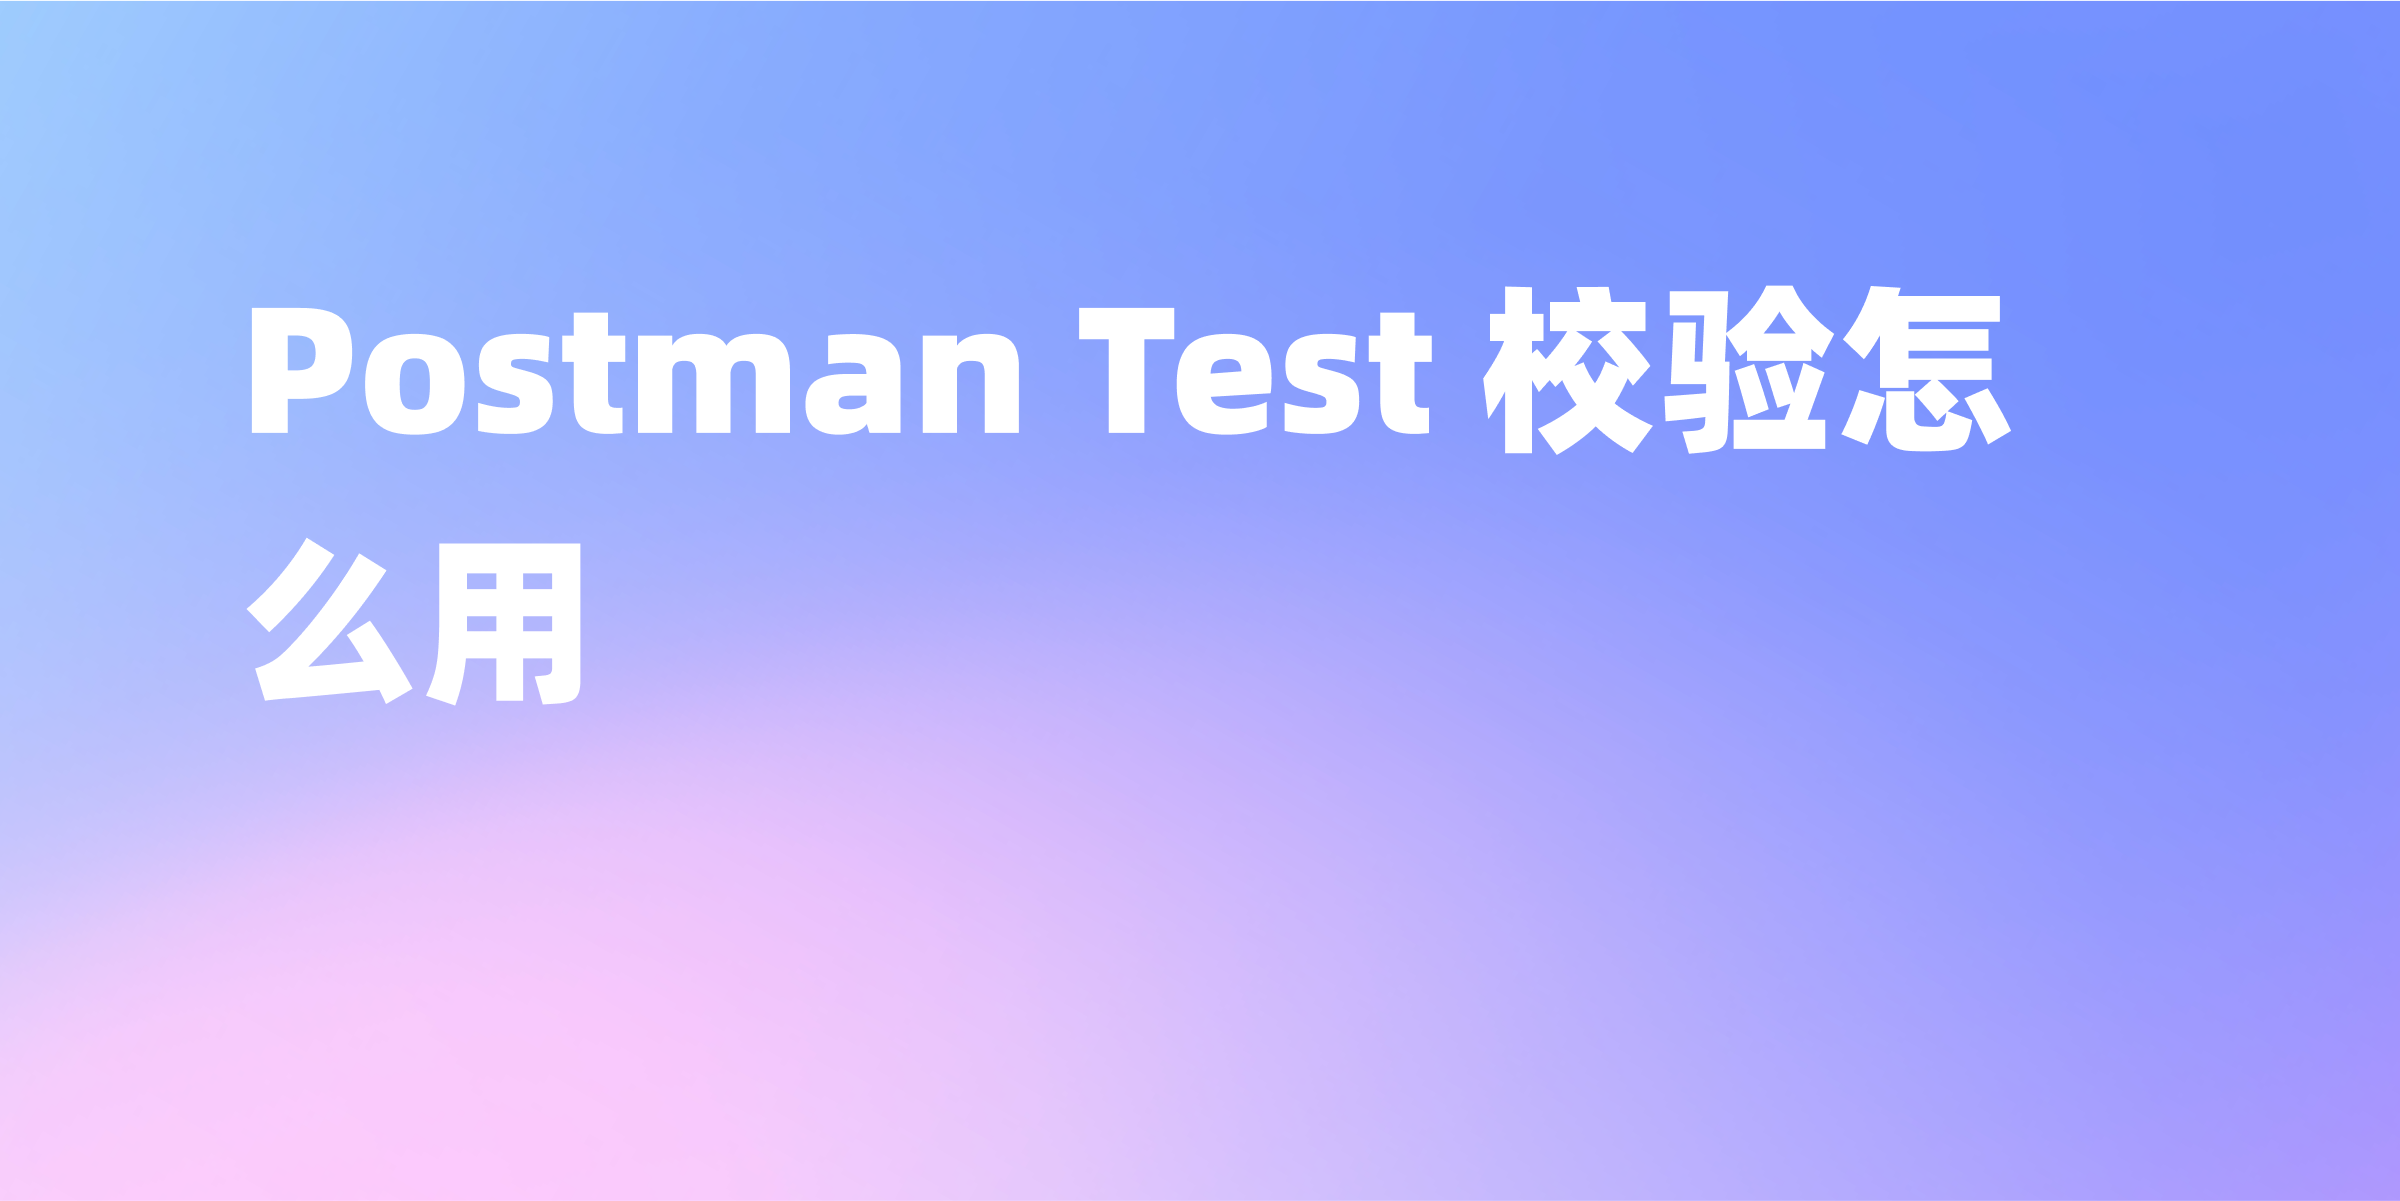 Postman Test 校验入门指南：轻松进行接口测试并验证响应